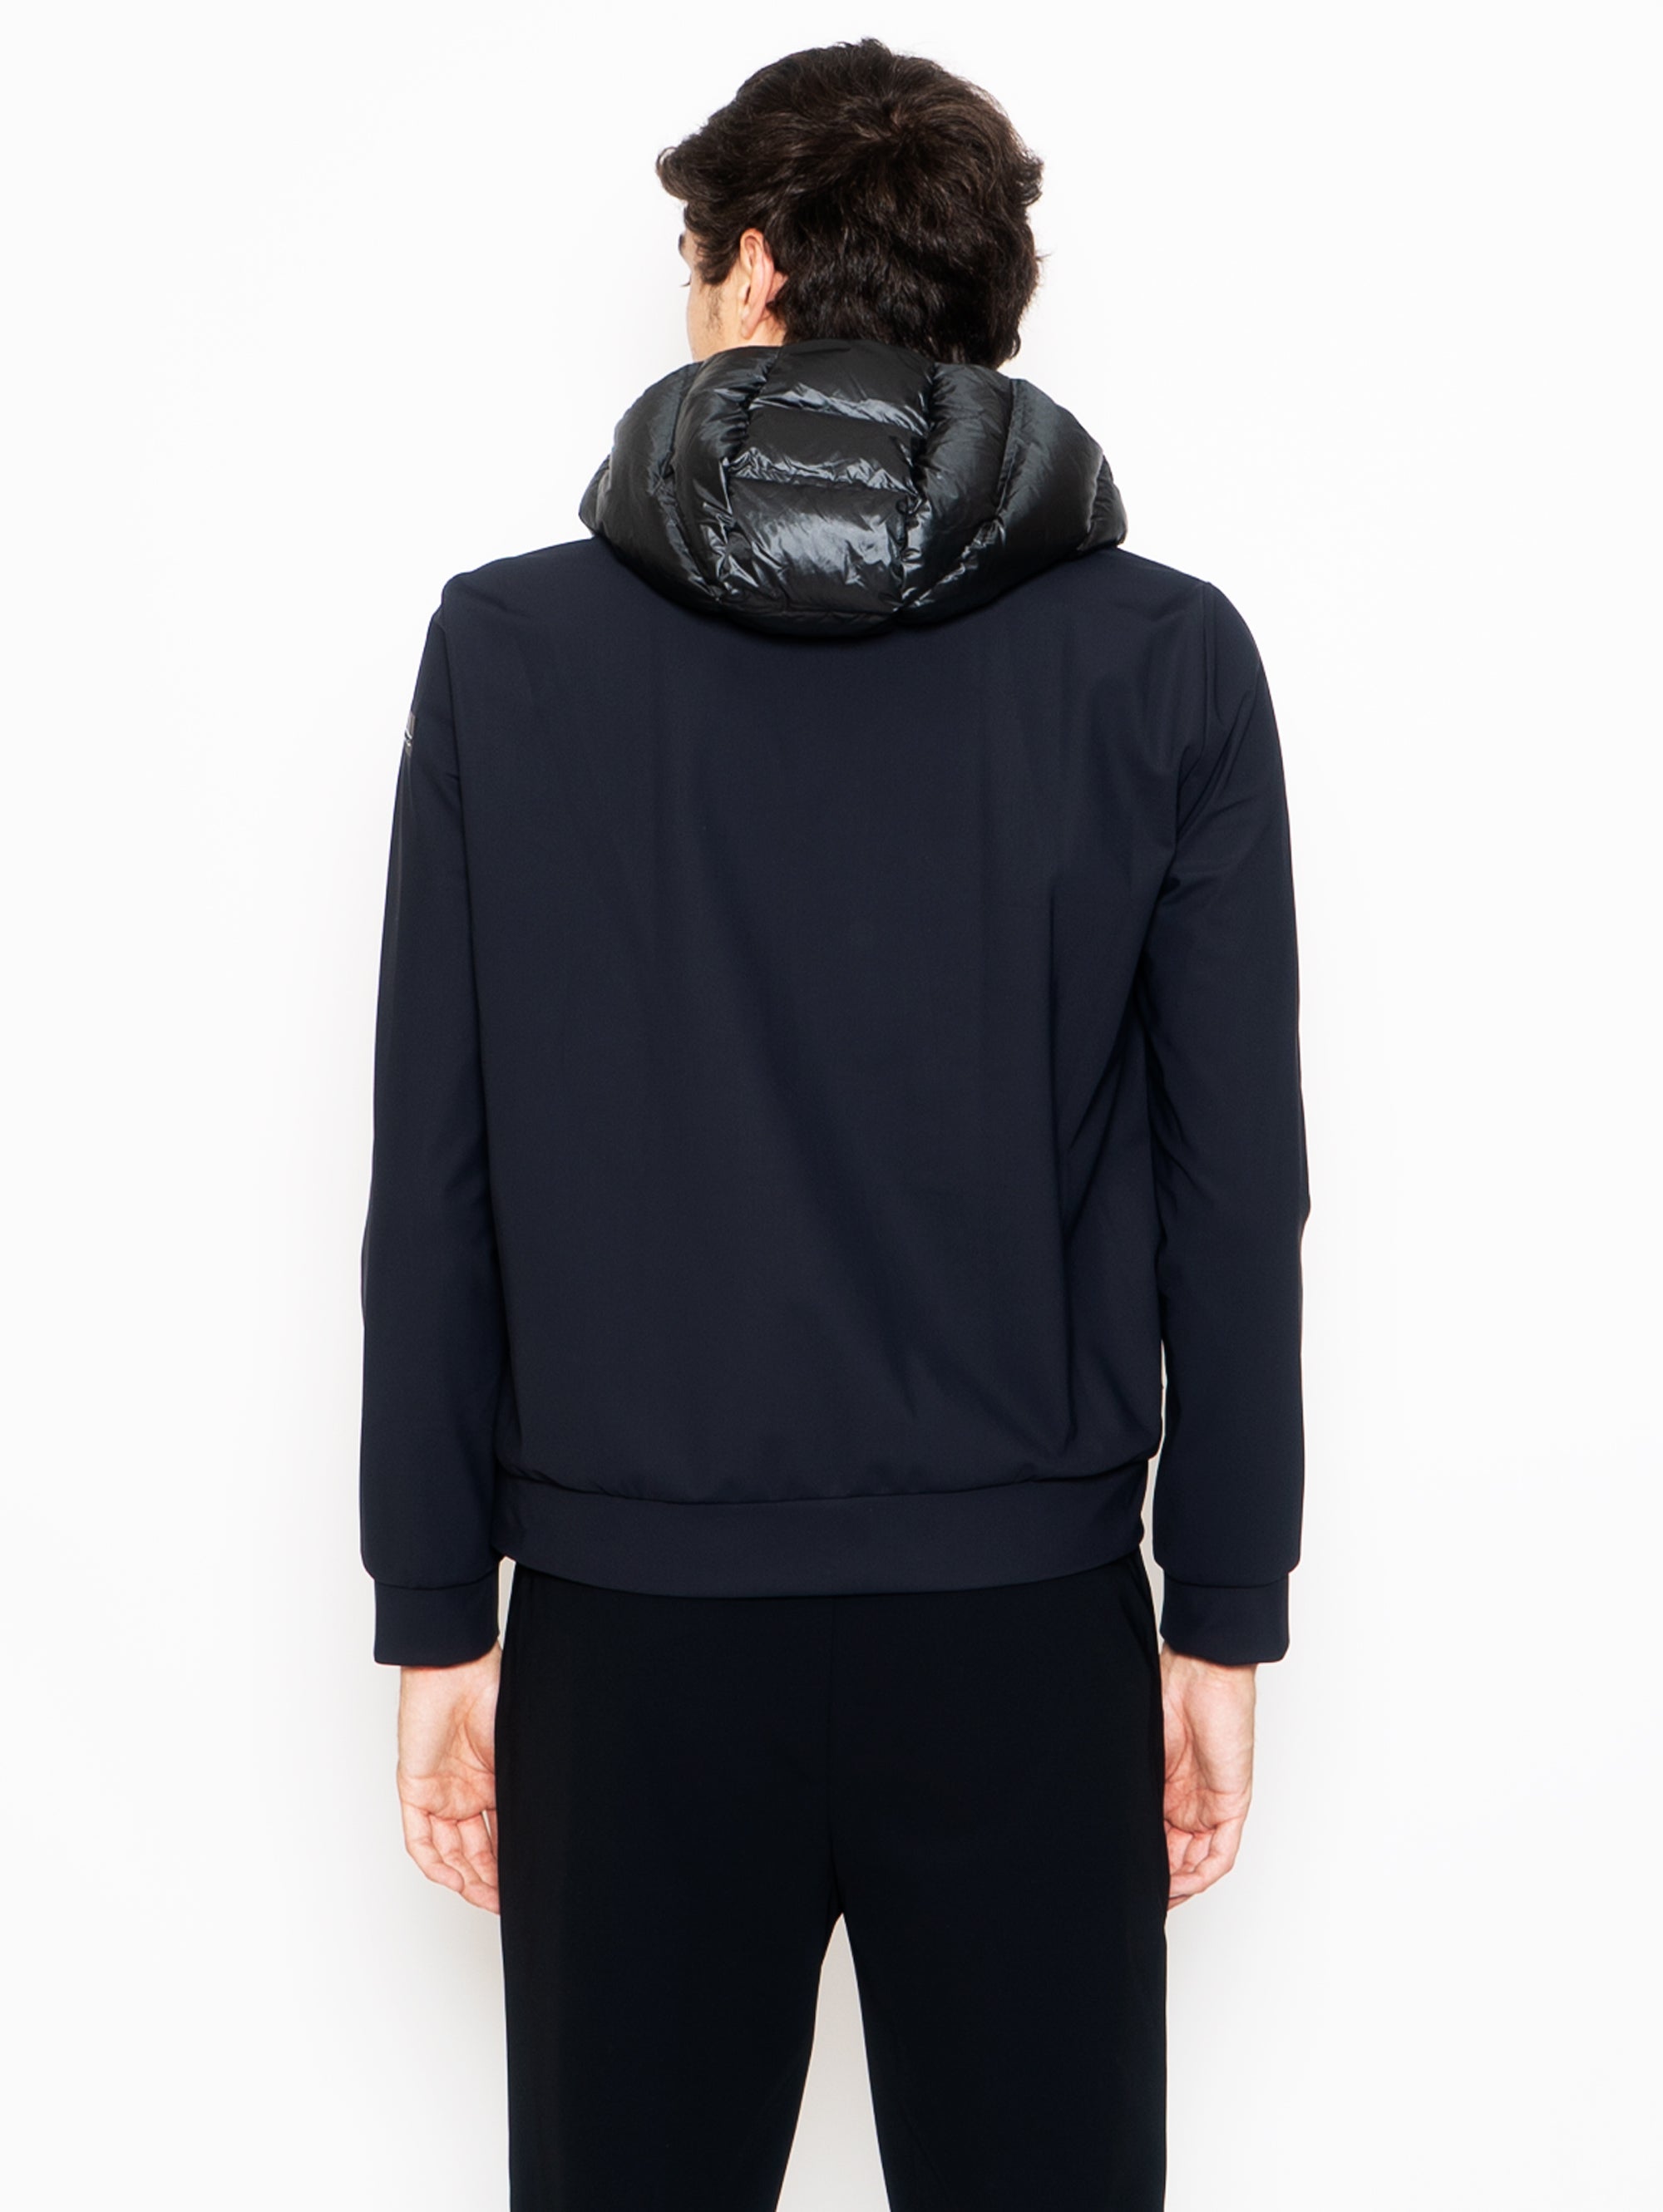 Schwarzes, gepolstertes Winter-Enten-Sweatshirt aus doppeltem Stoff